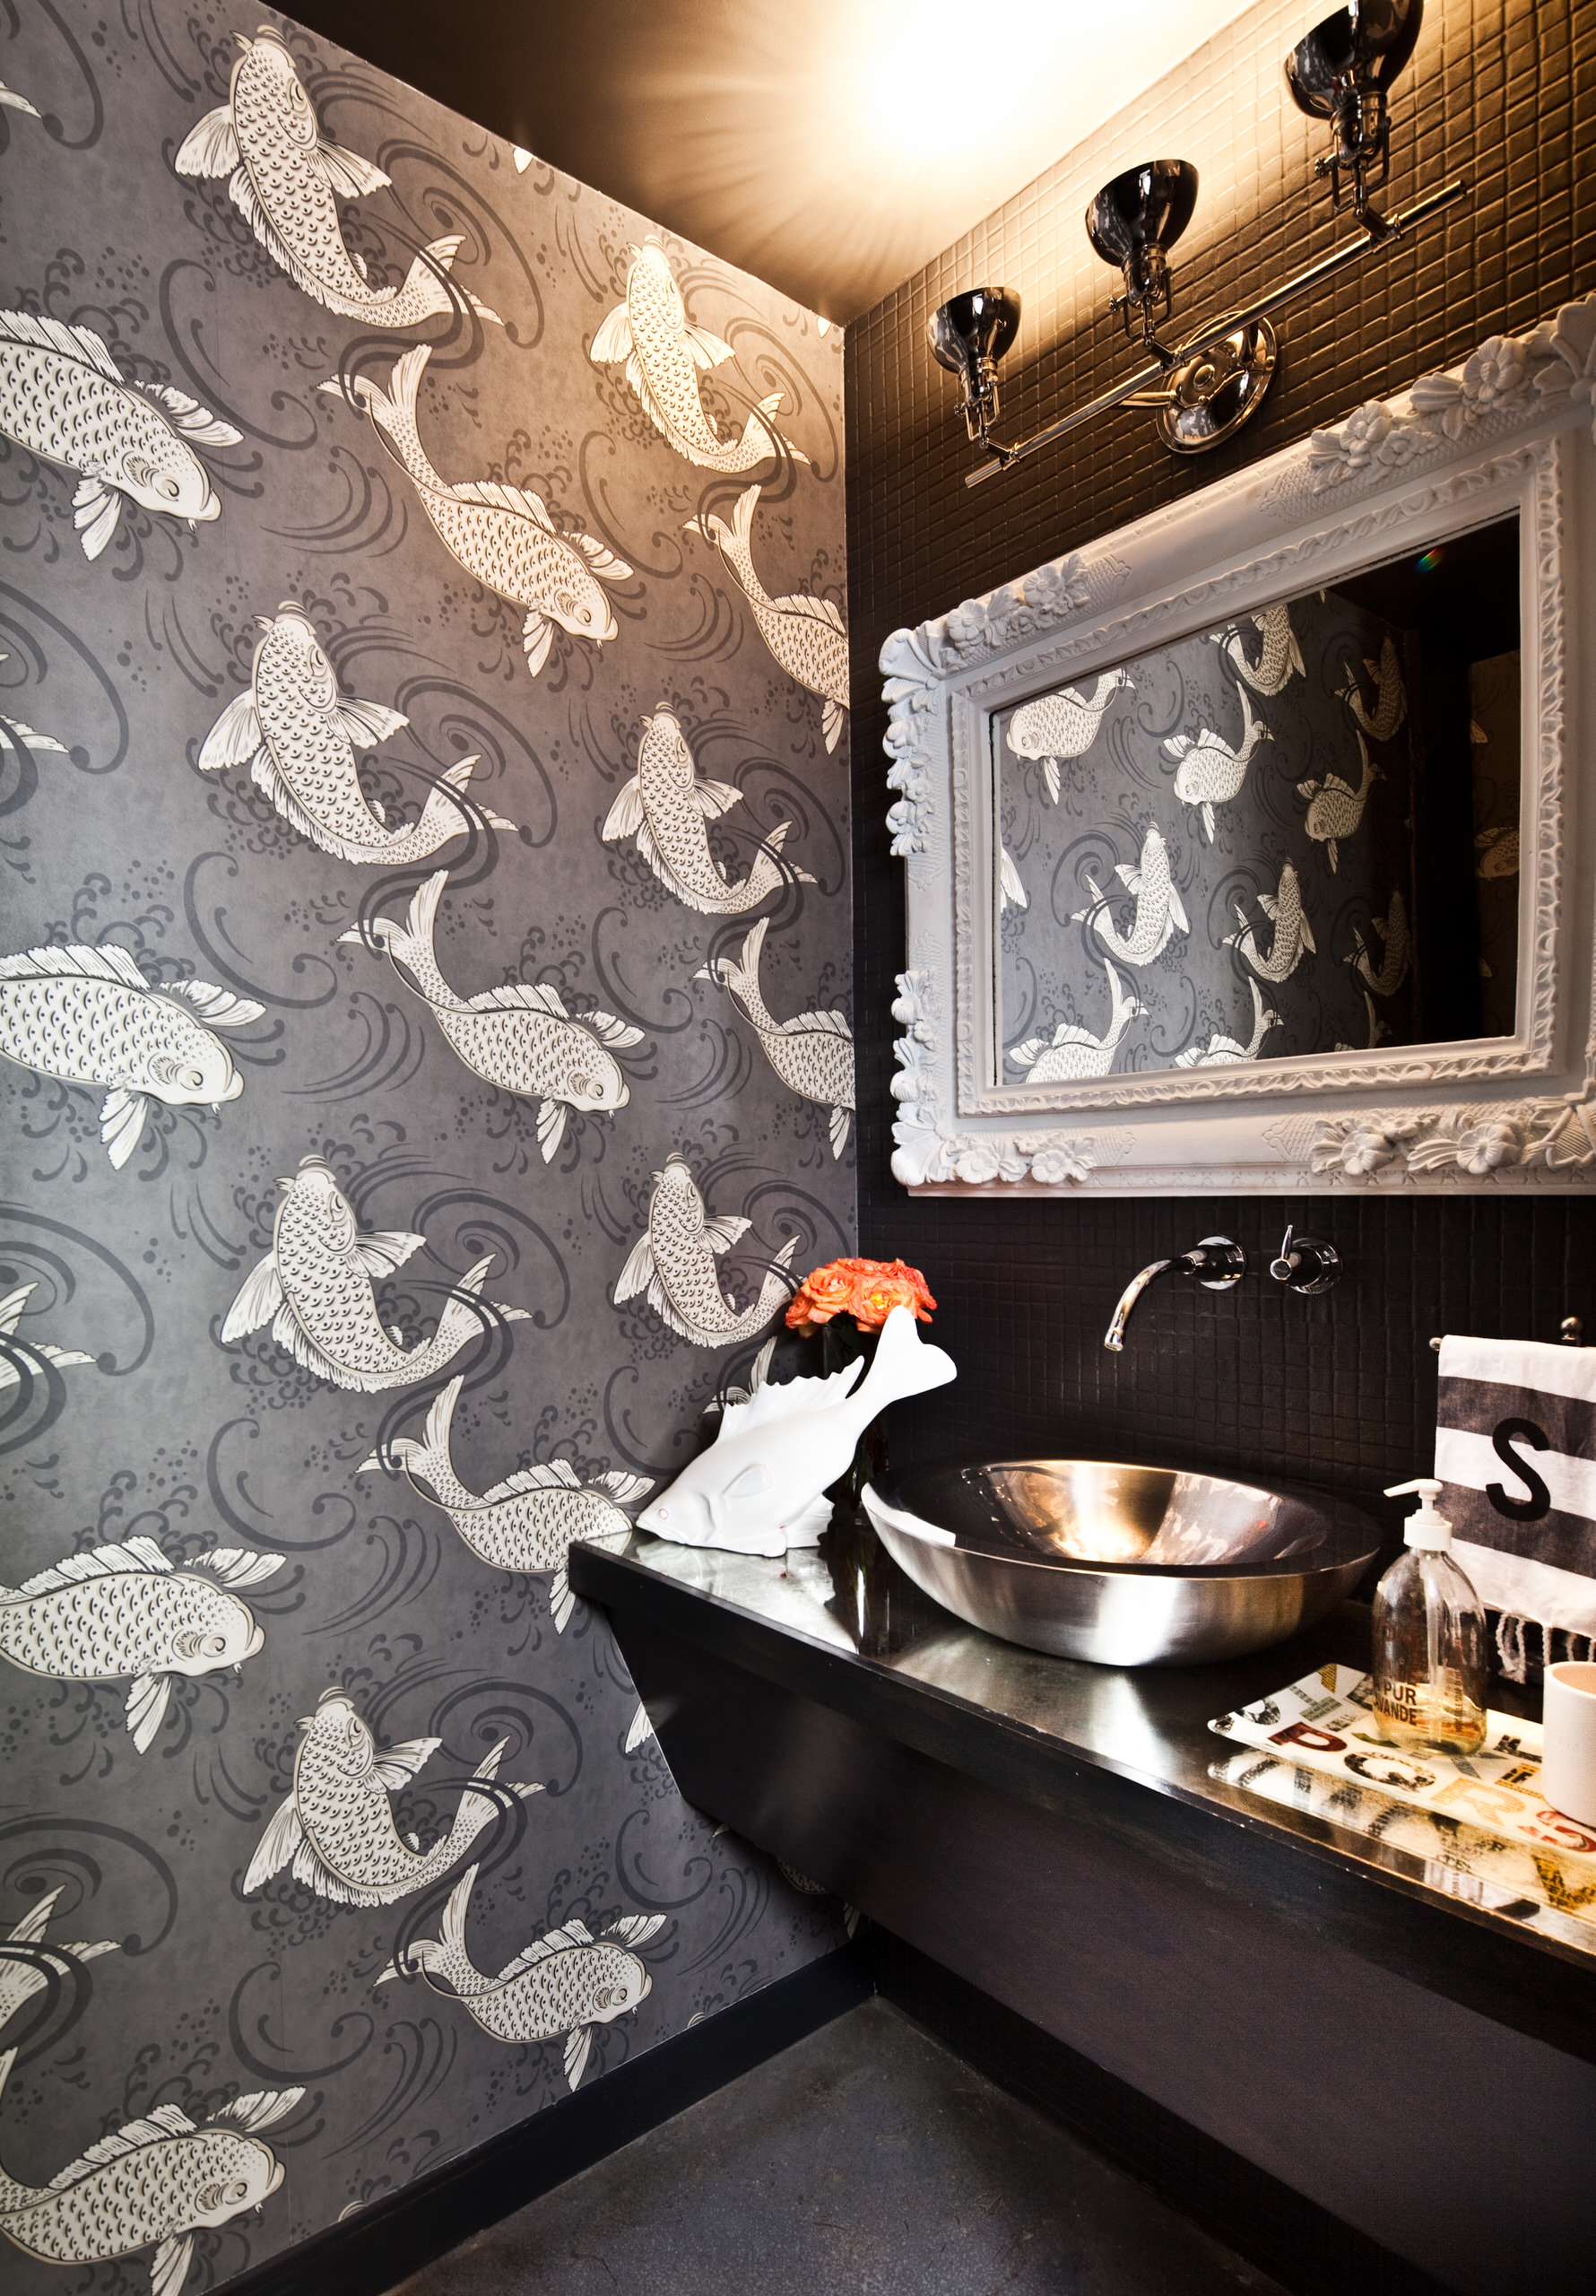 fish wallpaper for bathroom,room,wallpaper,interior design,property,wall